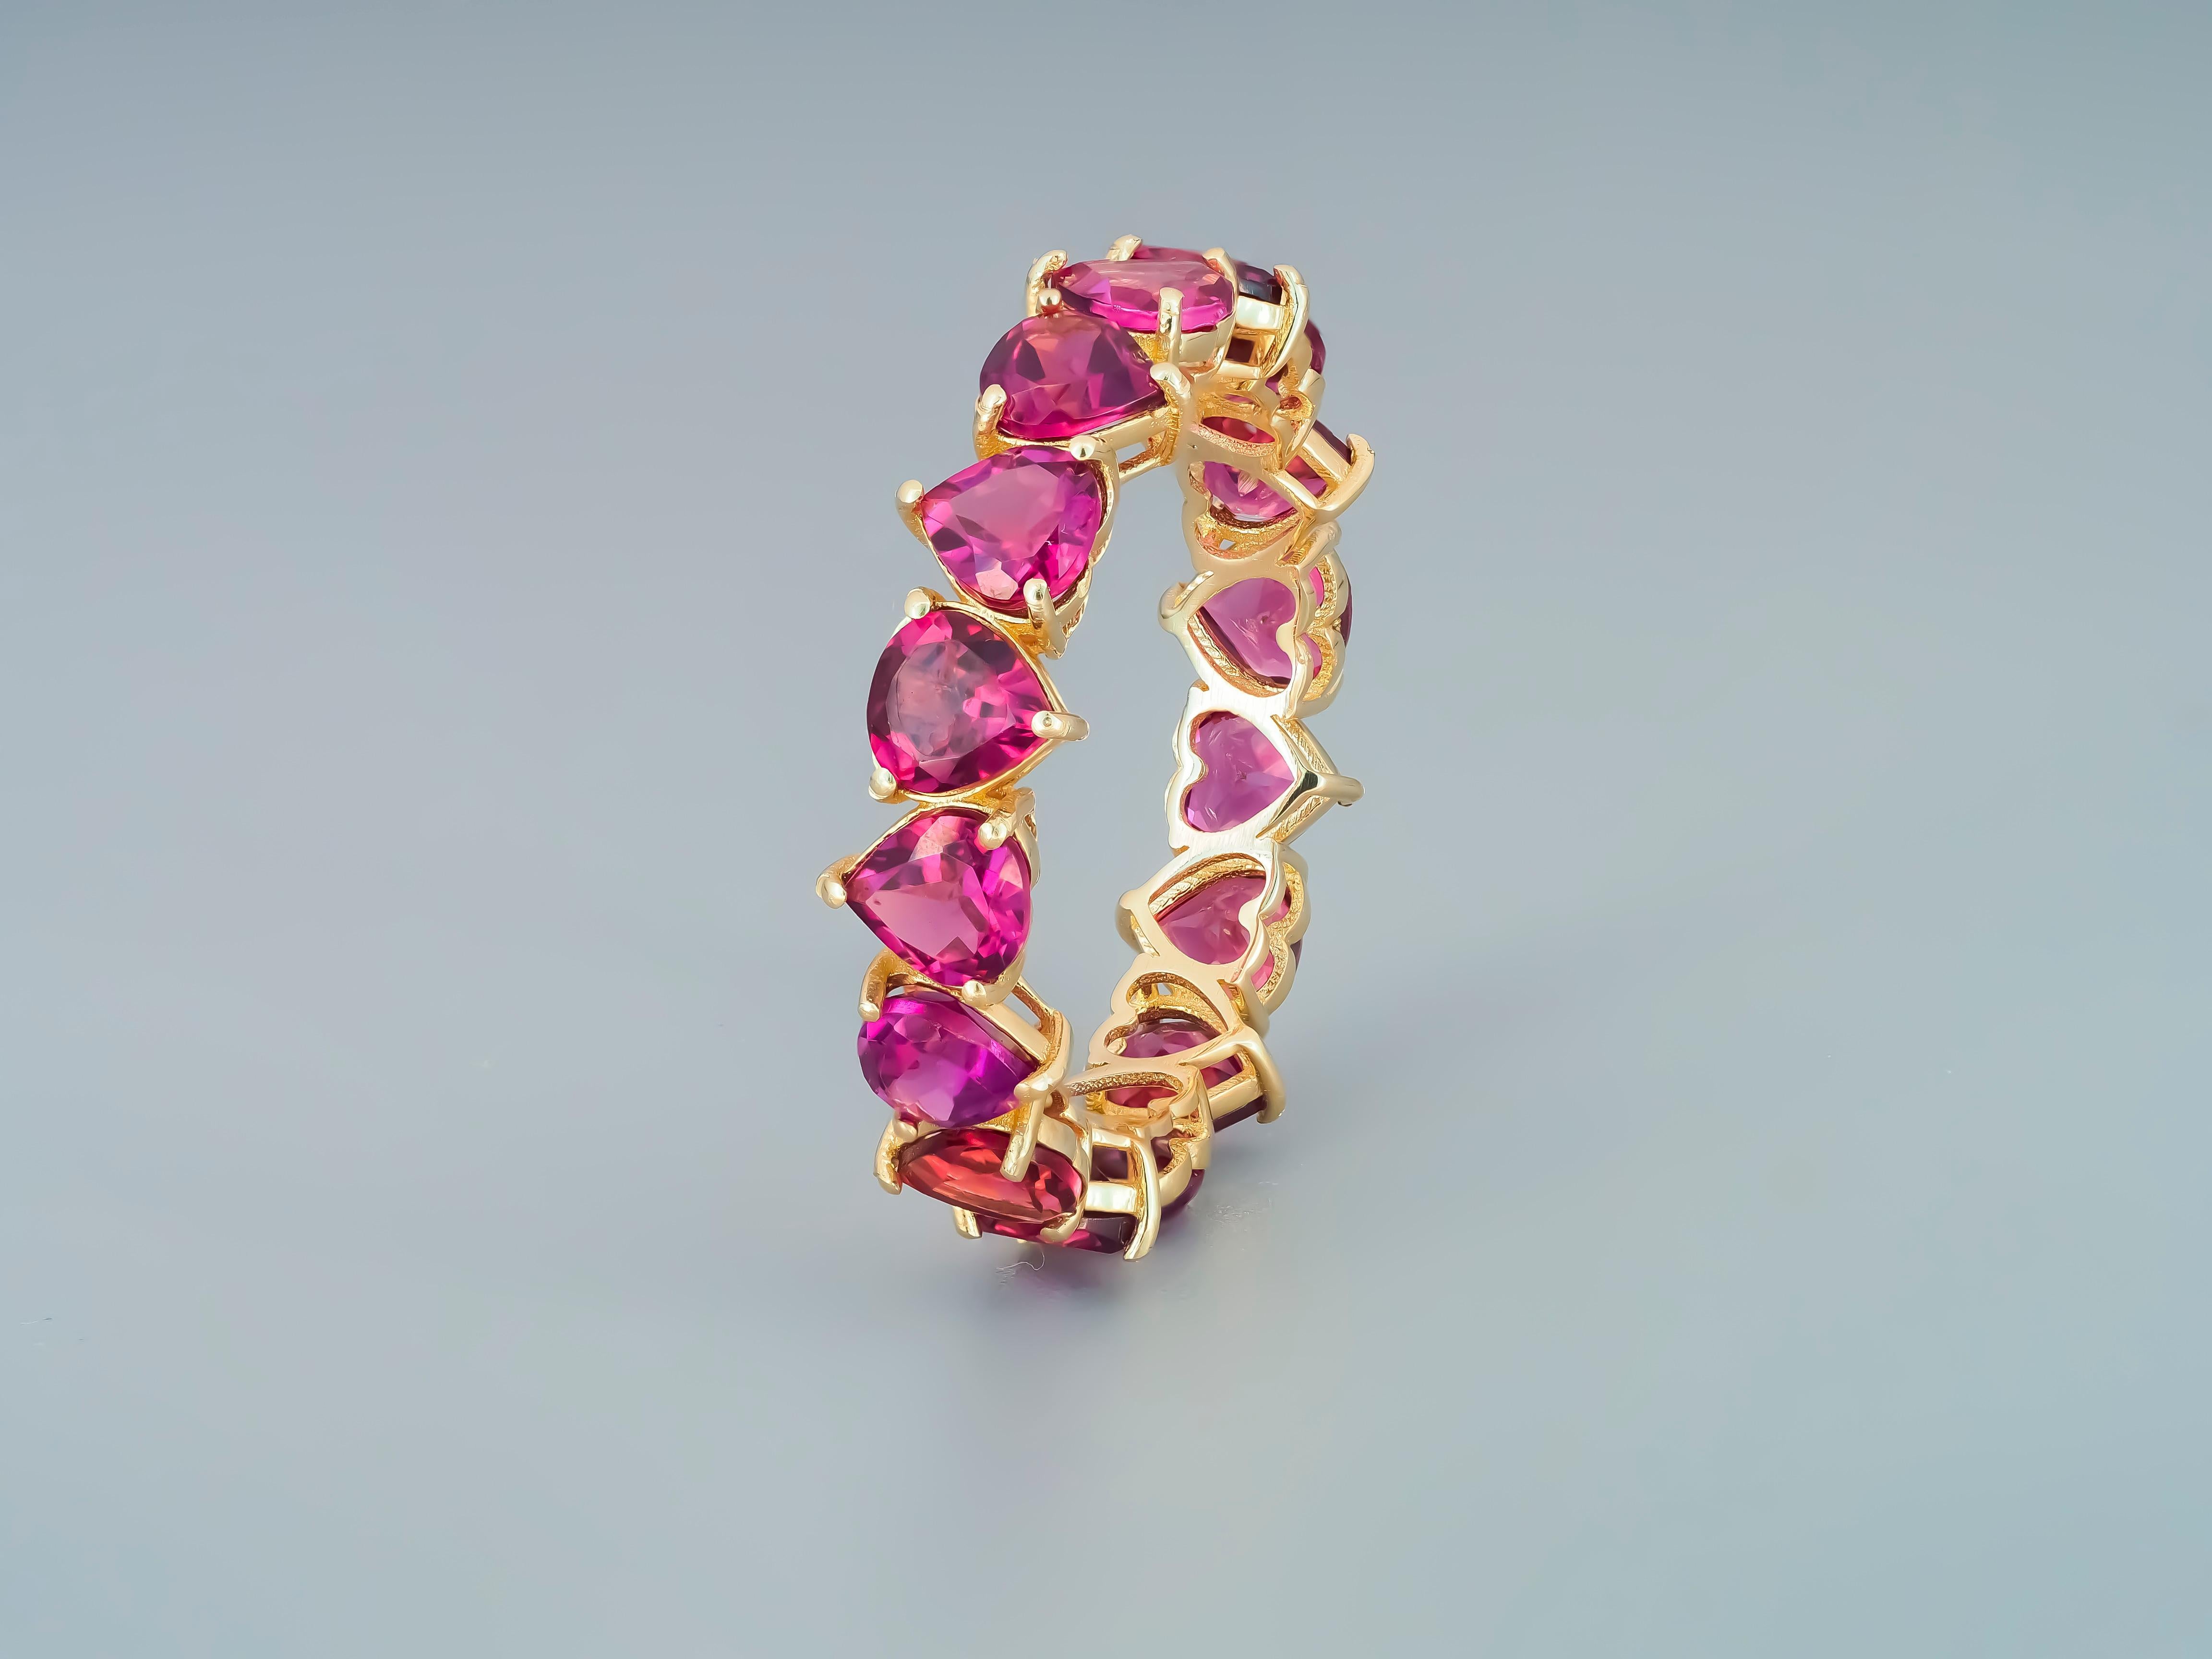 For Sale:  Heart garnet ring. 14k Gold Heart Eternity Ring with Heart Garnets! 3